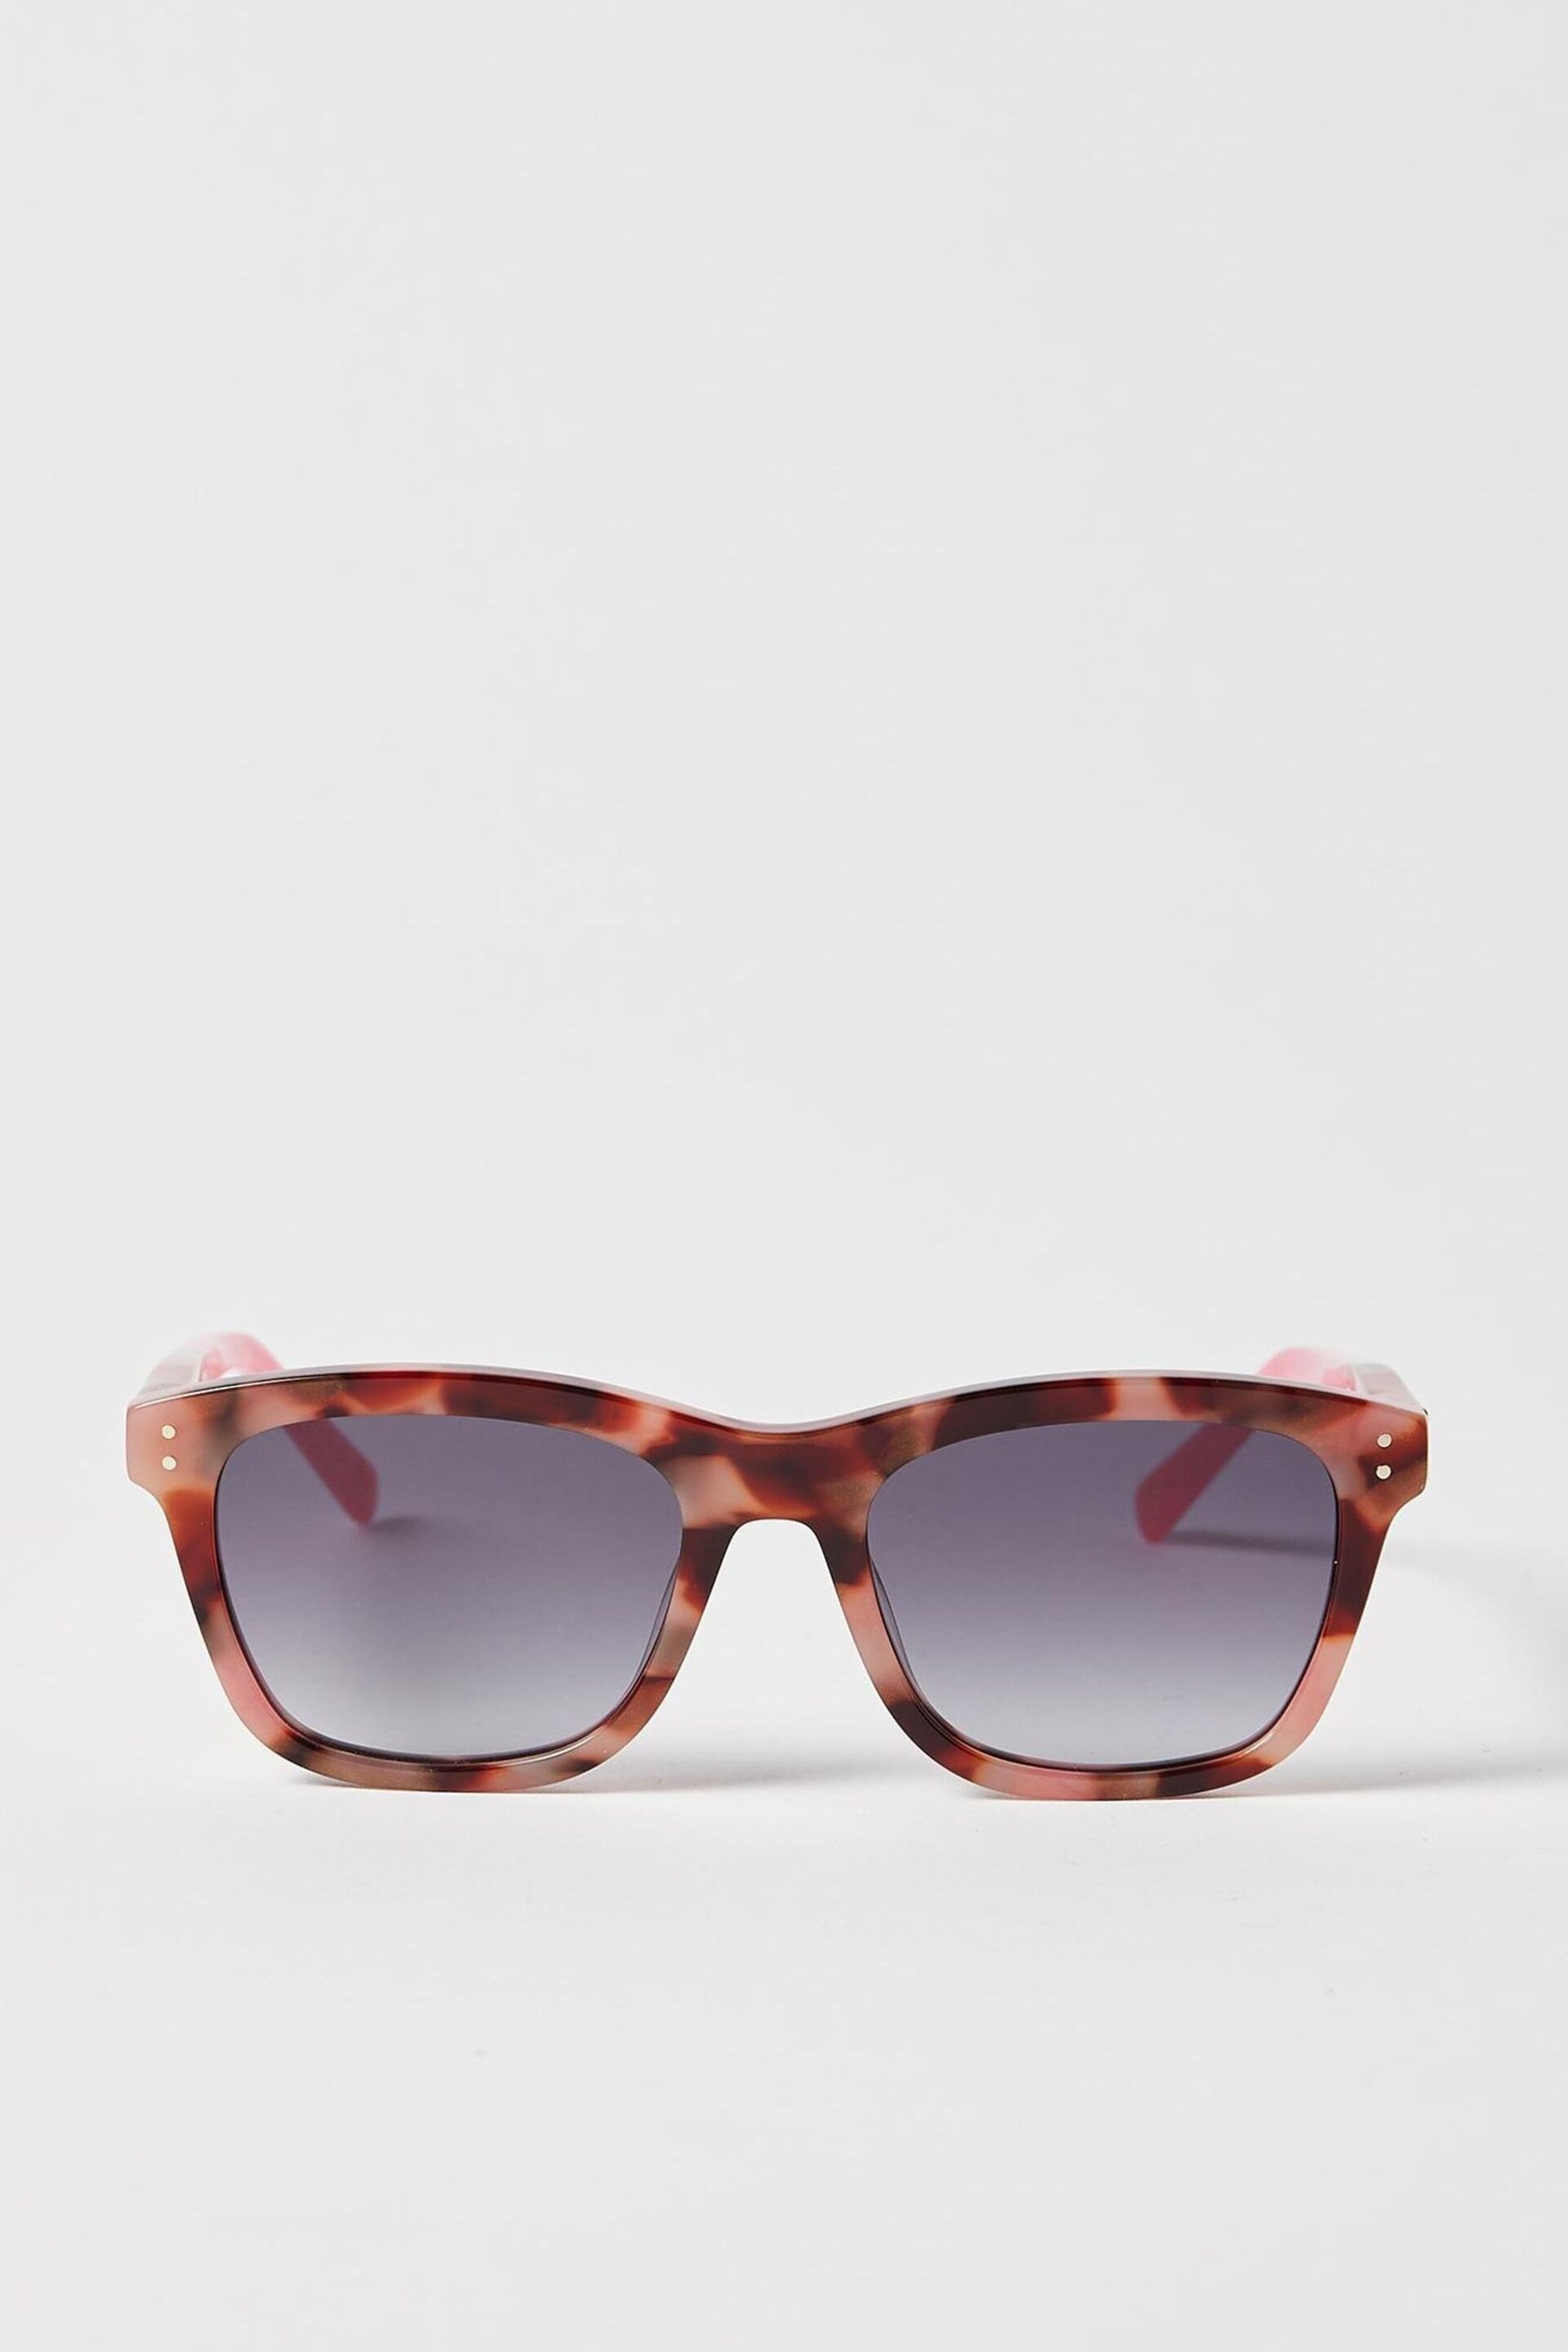 Oliver Bonas Pink Faux Tortoiseshell Pink Rectangle Acetate Sunglasses - Image 2 of 5